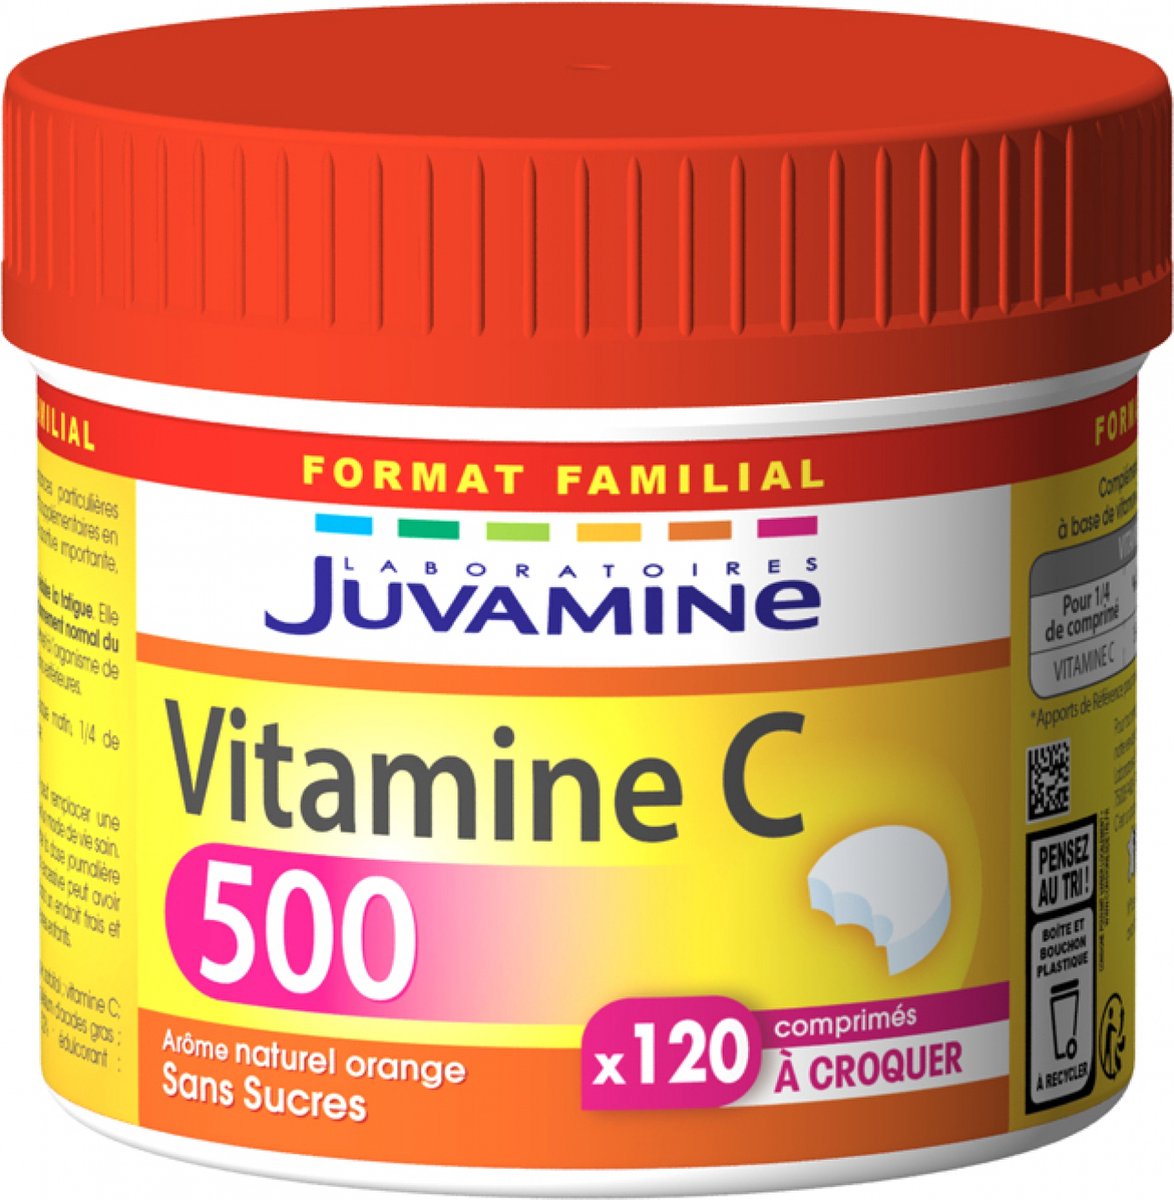 Juvamine Vitamine C 500 120 Kauwtabletten